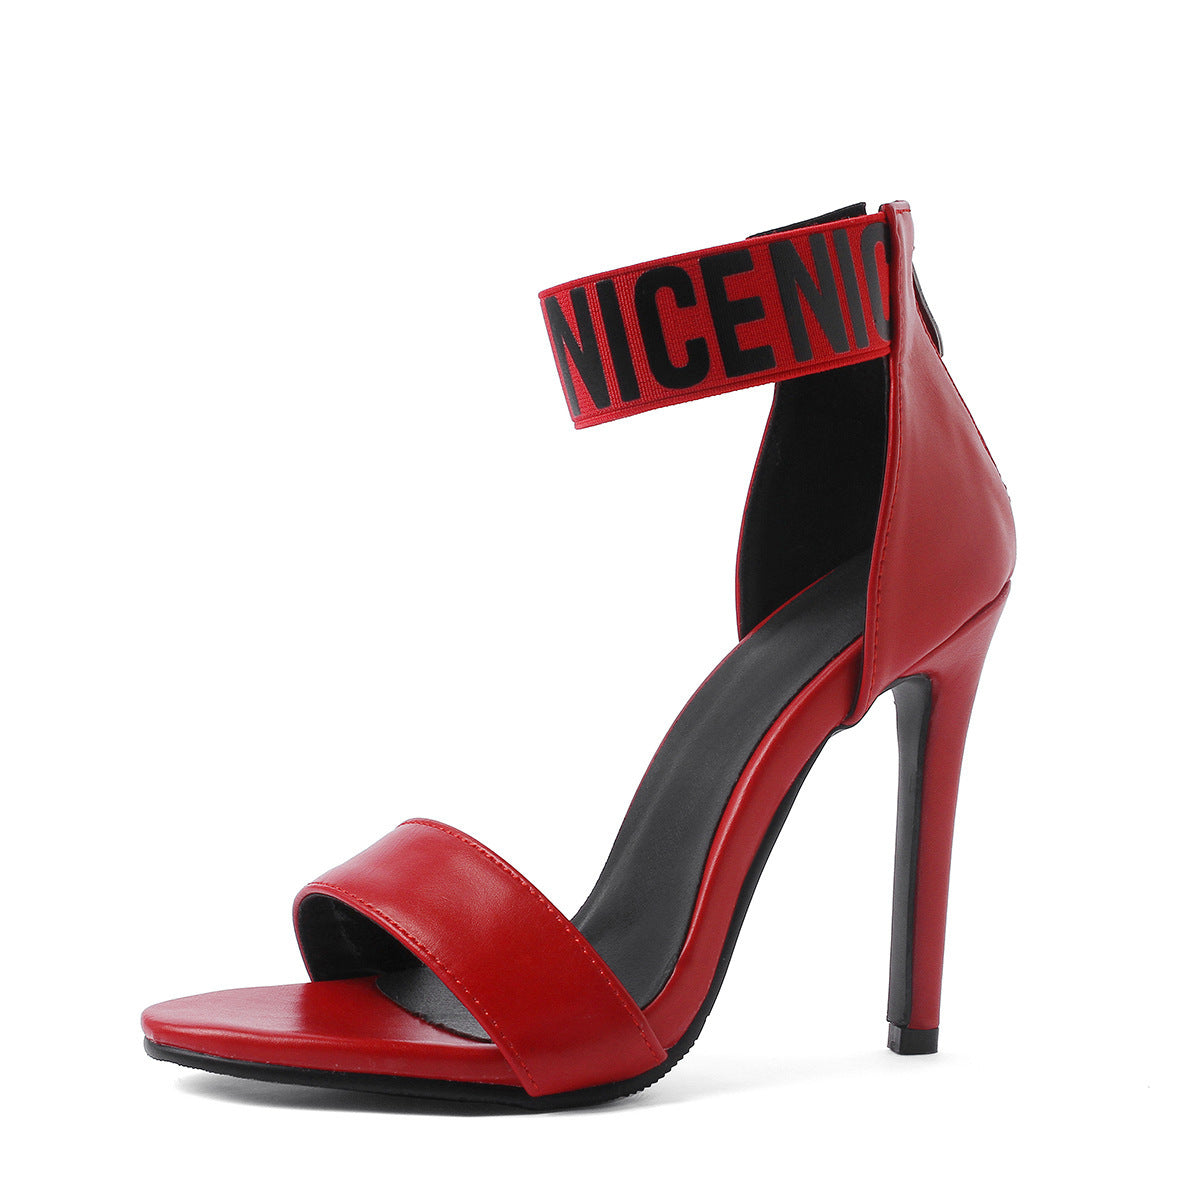 Women's high heel stiletto shoes